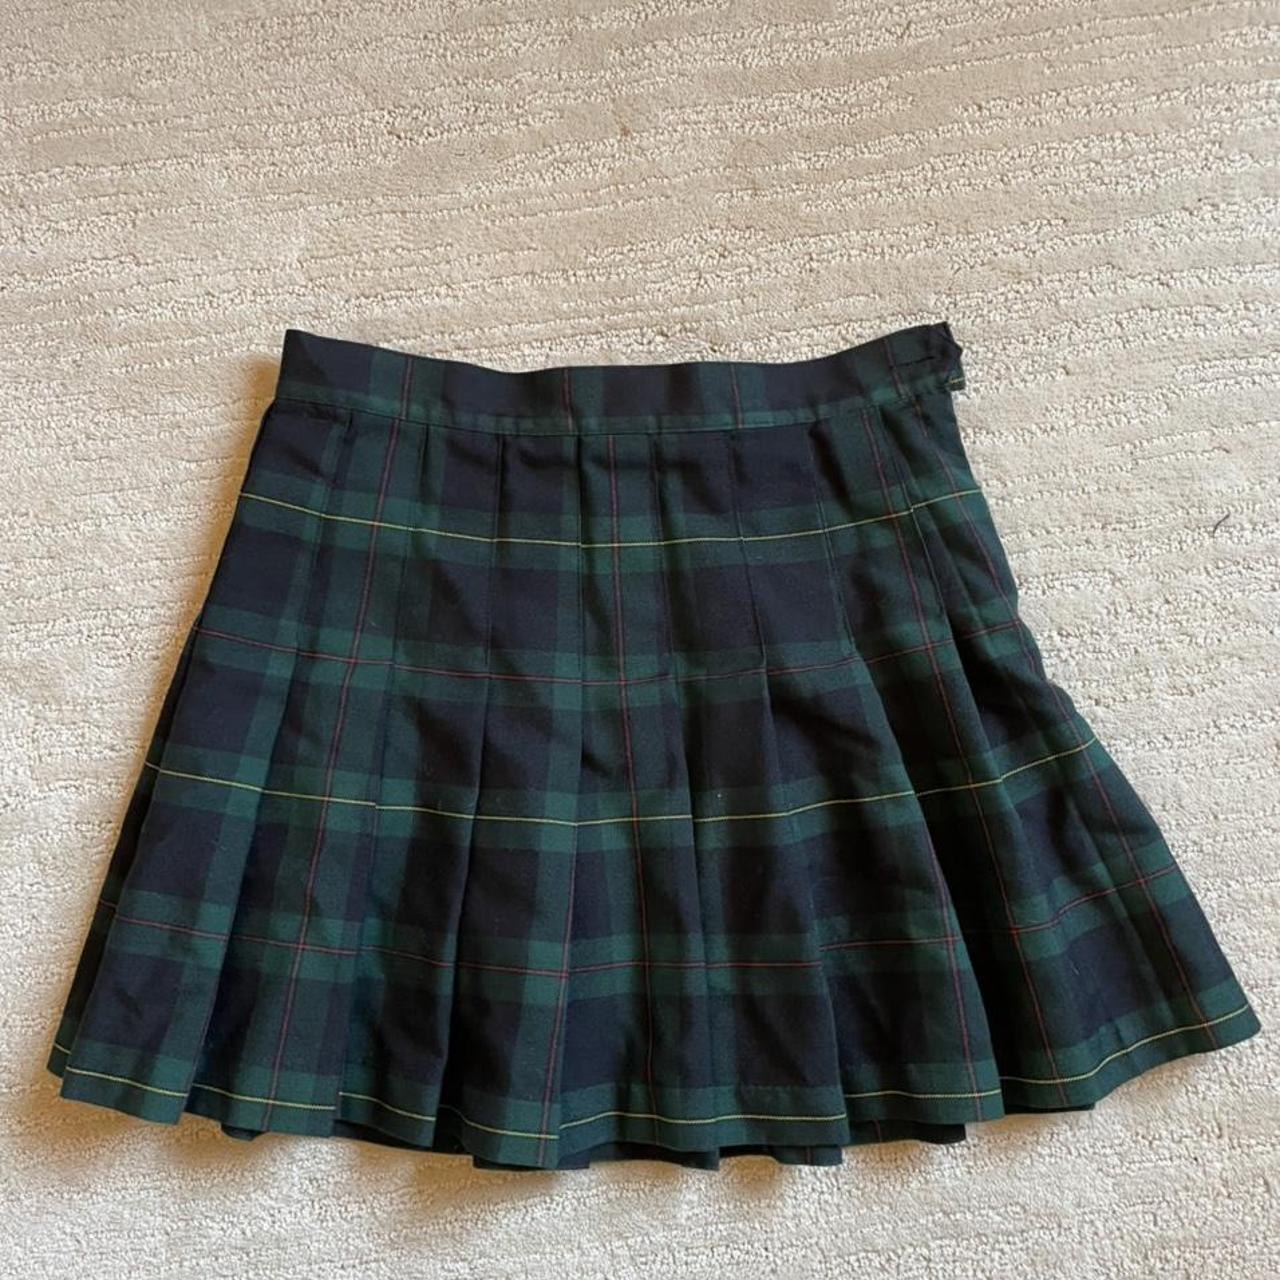 American Apparel Women's Skirt